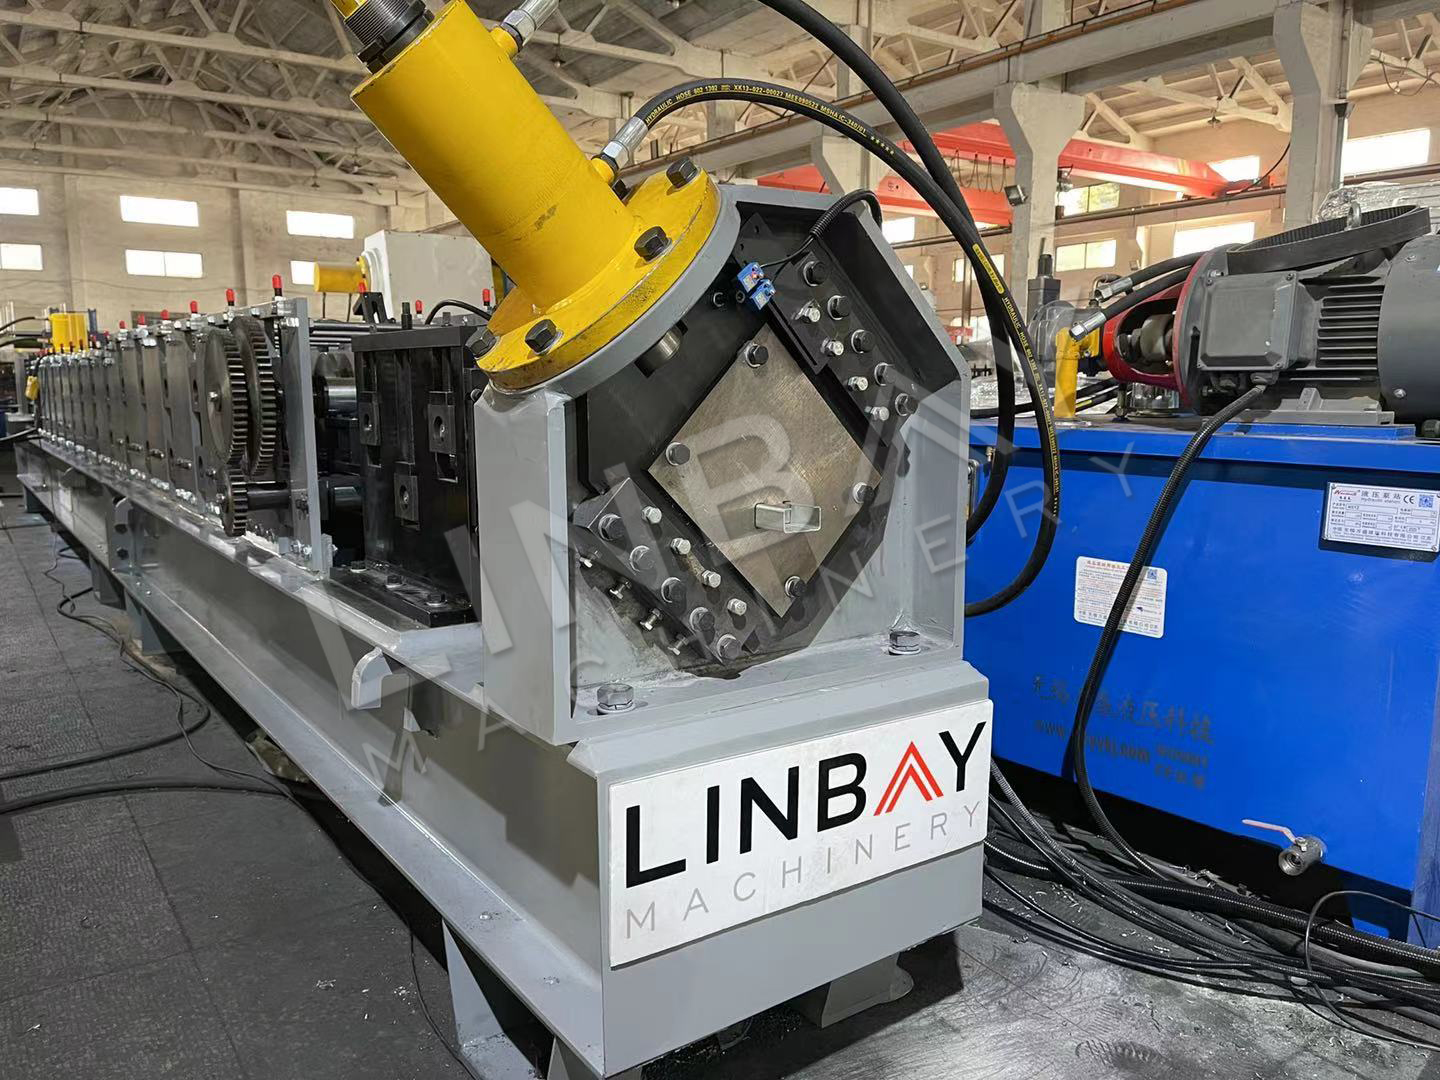 LINBAY-Exportación de Máquina par Riostras a Chile